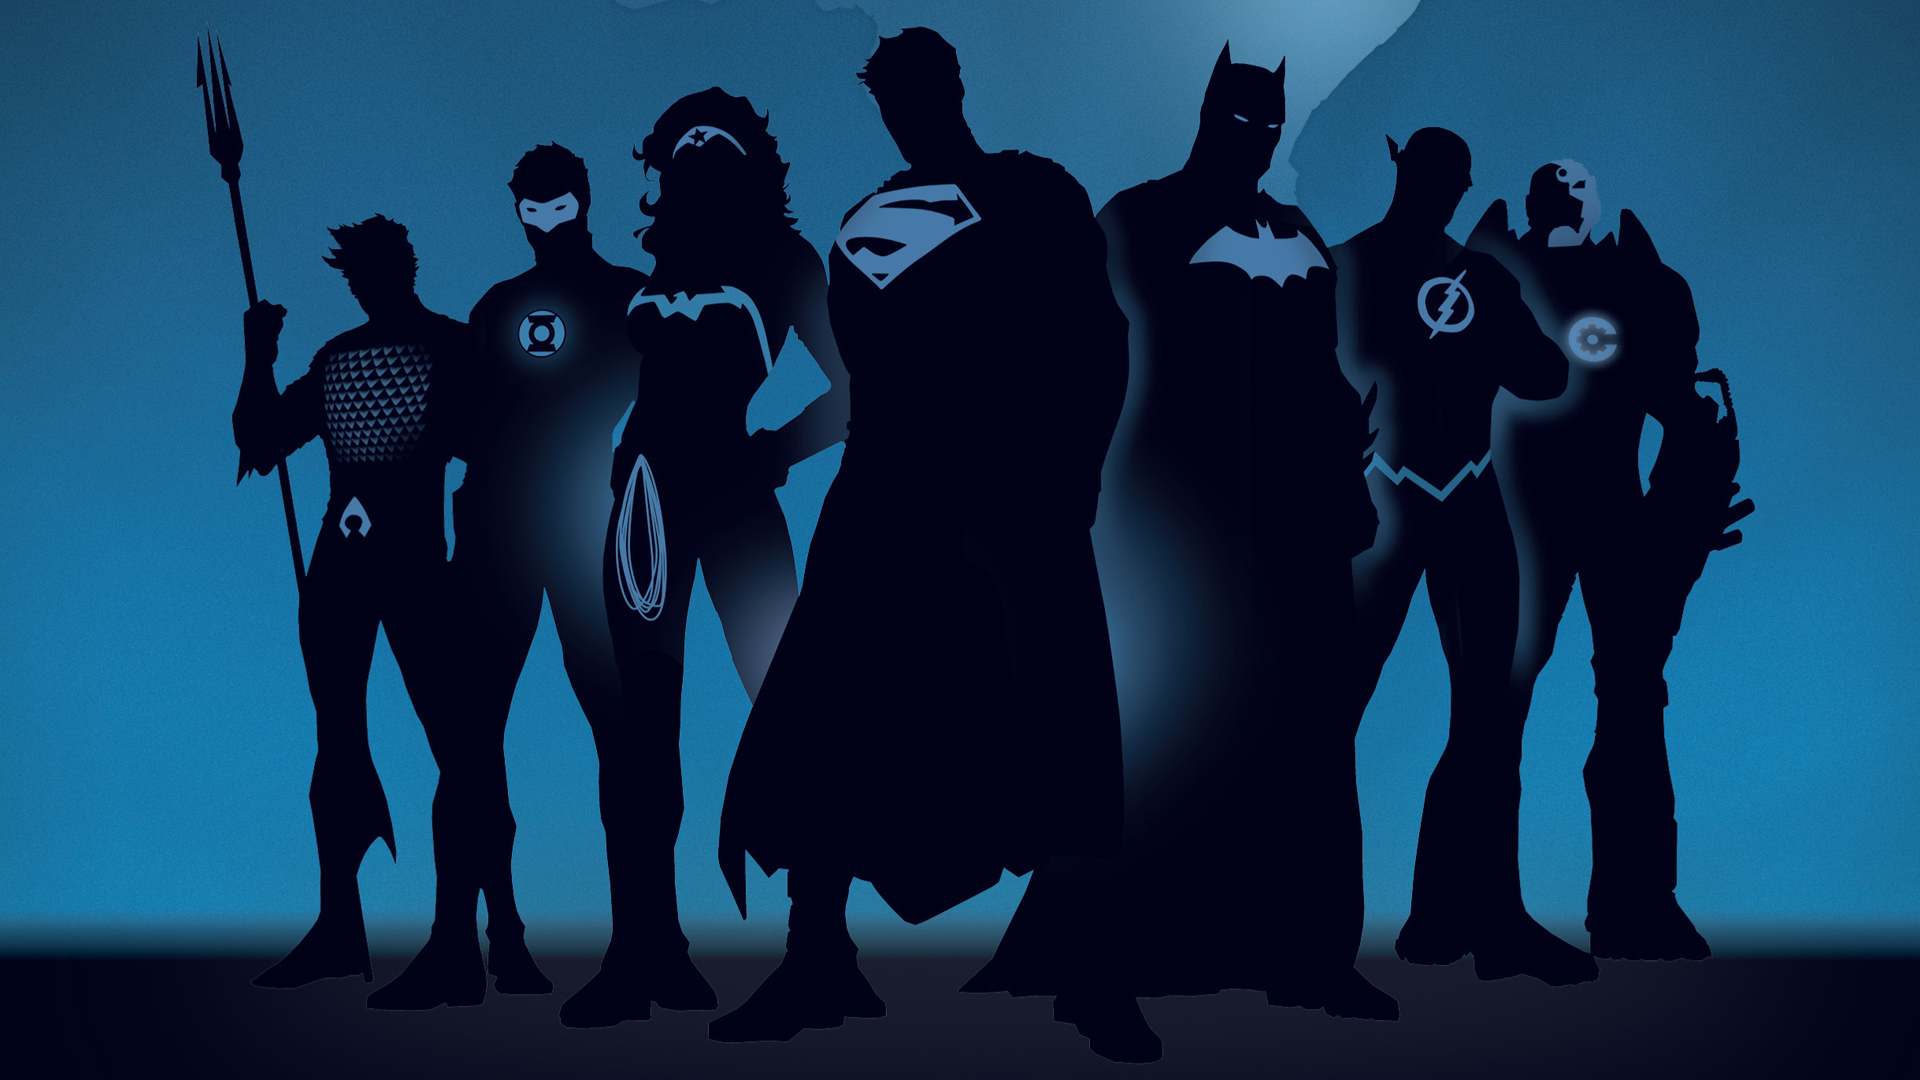 superman, batman, bruce wayne, cyborg (dc comics), dc comics, comics, aquaman, the dark knight, diana prince, justice league, wonder woman, barry allen, flash, green lantern 32K